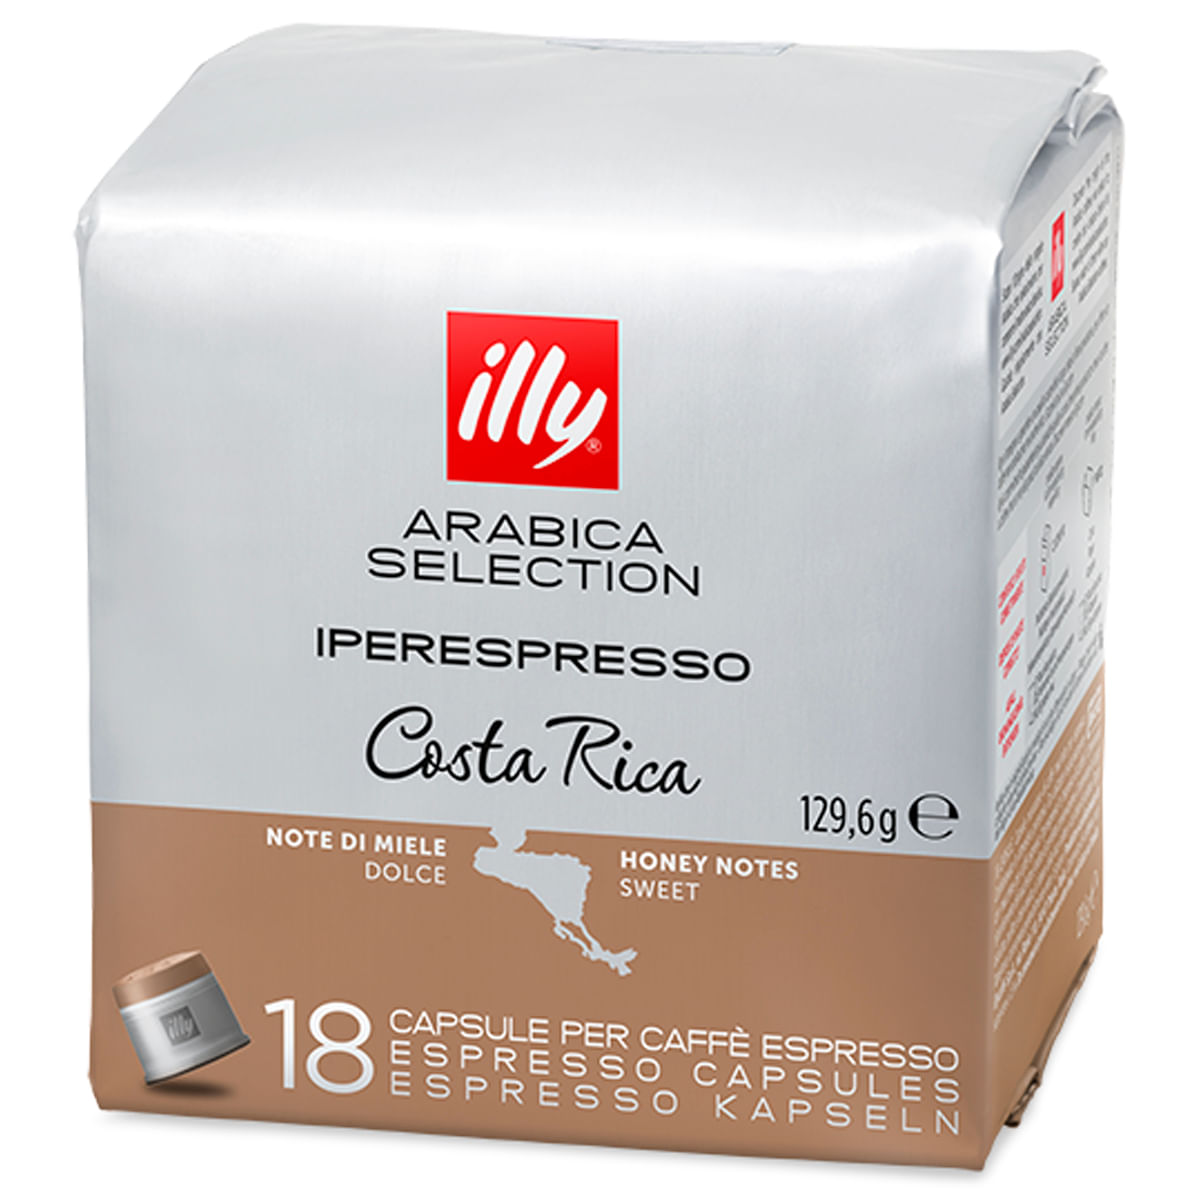 Illy Caffè - Caffè in Capsule Iperespresso Arabica Selection Costa Rica su